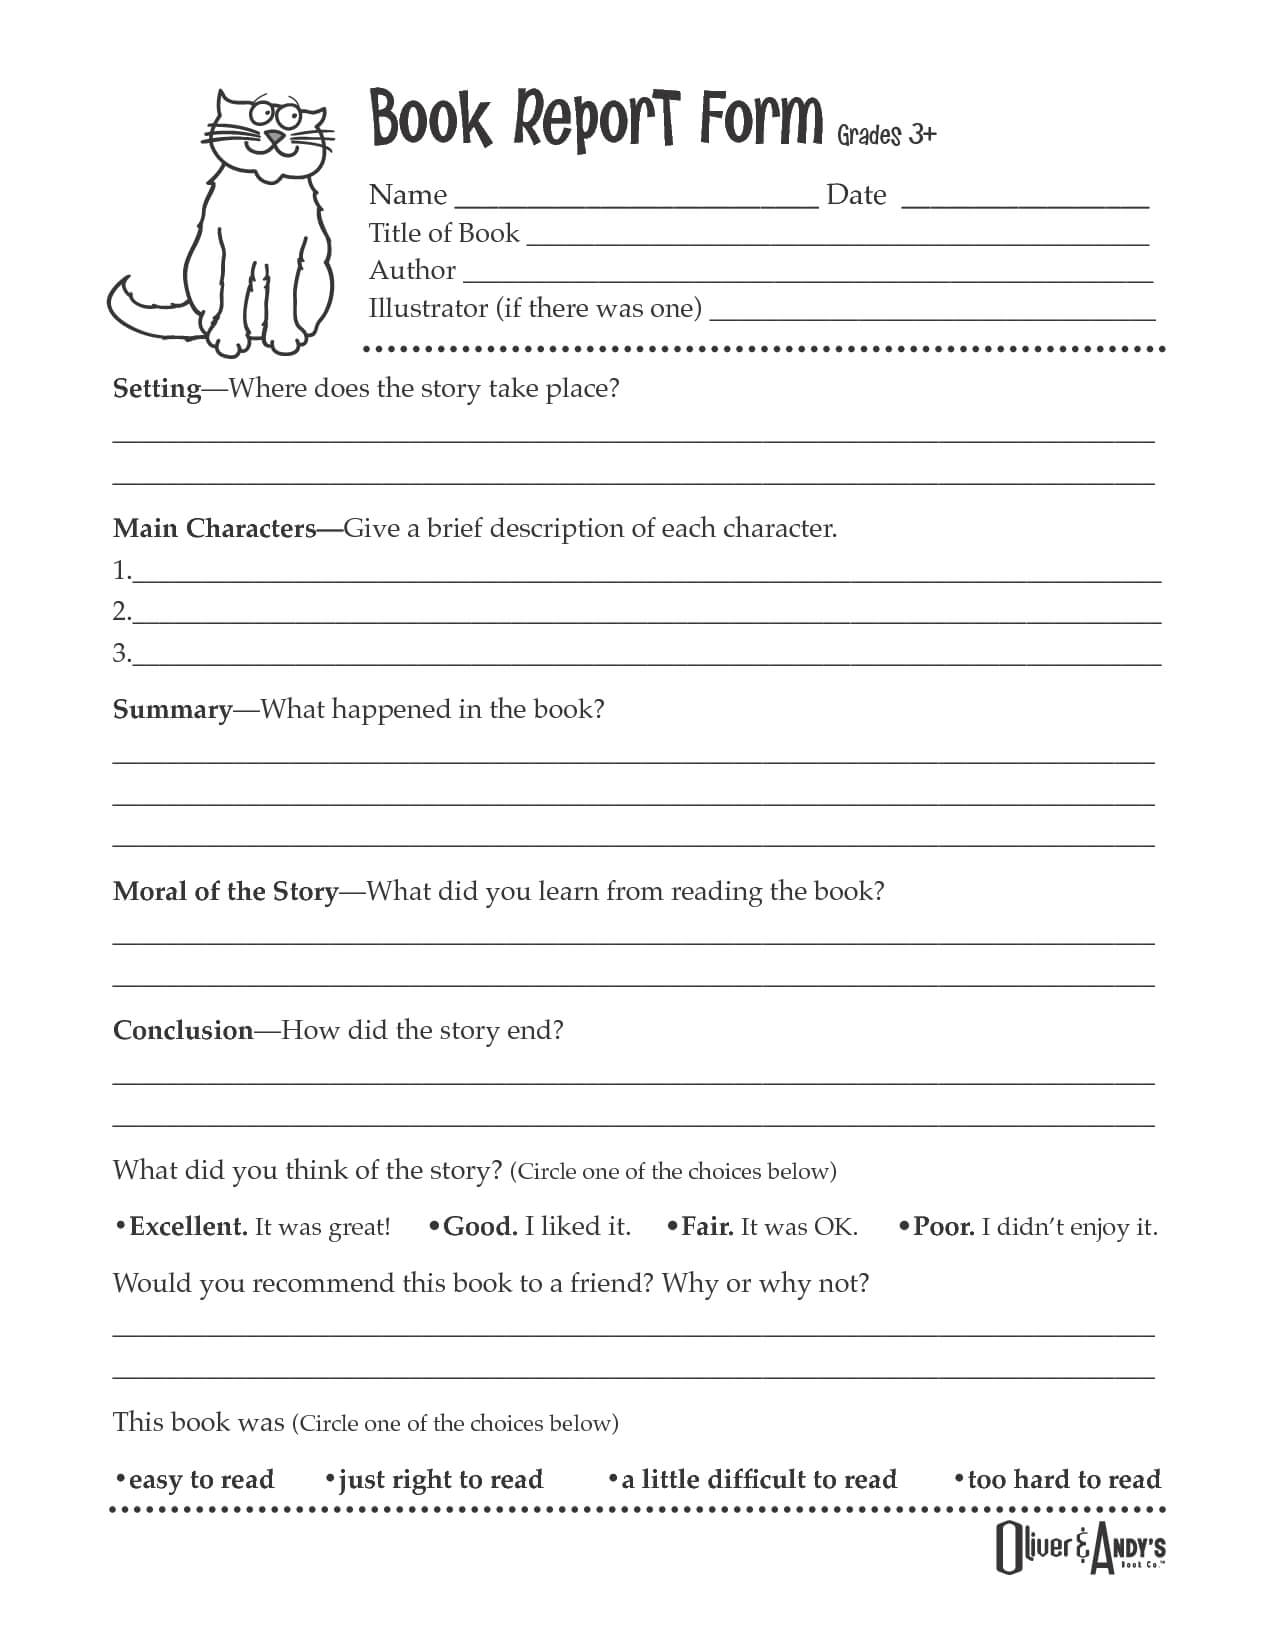 Second Grade Book Report Template | Book Report Form Grades With Book Report Template 4Th Grade